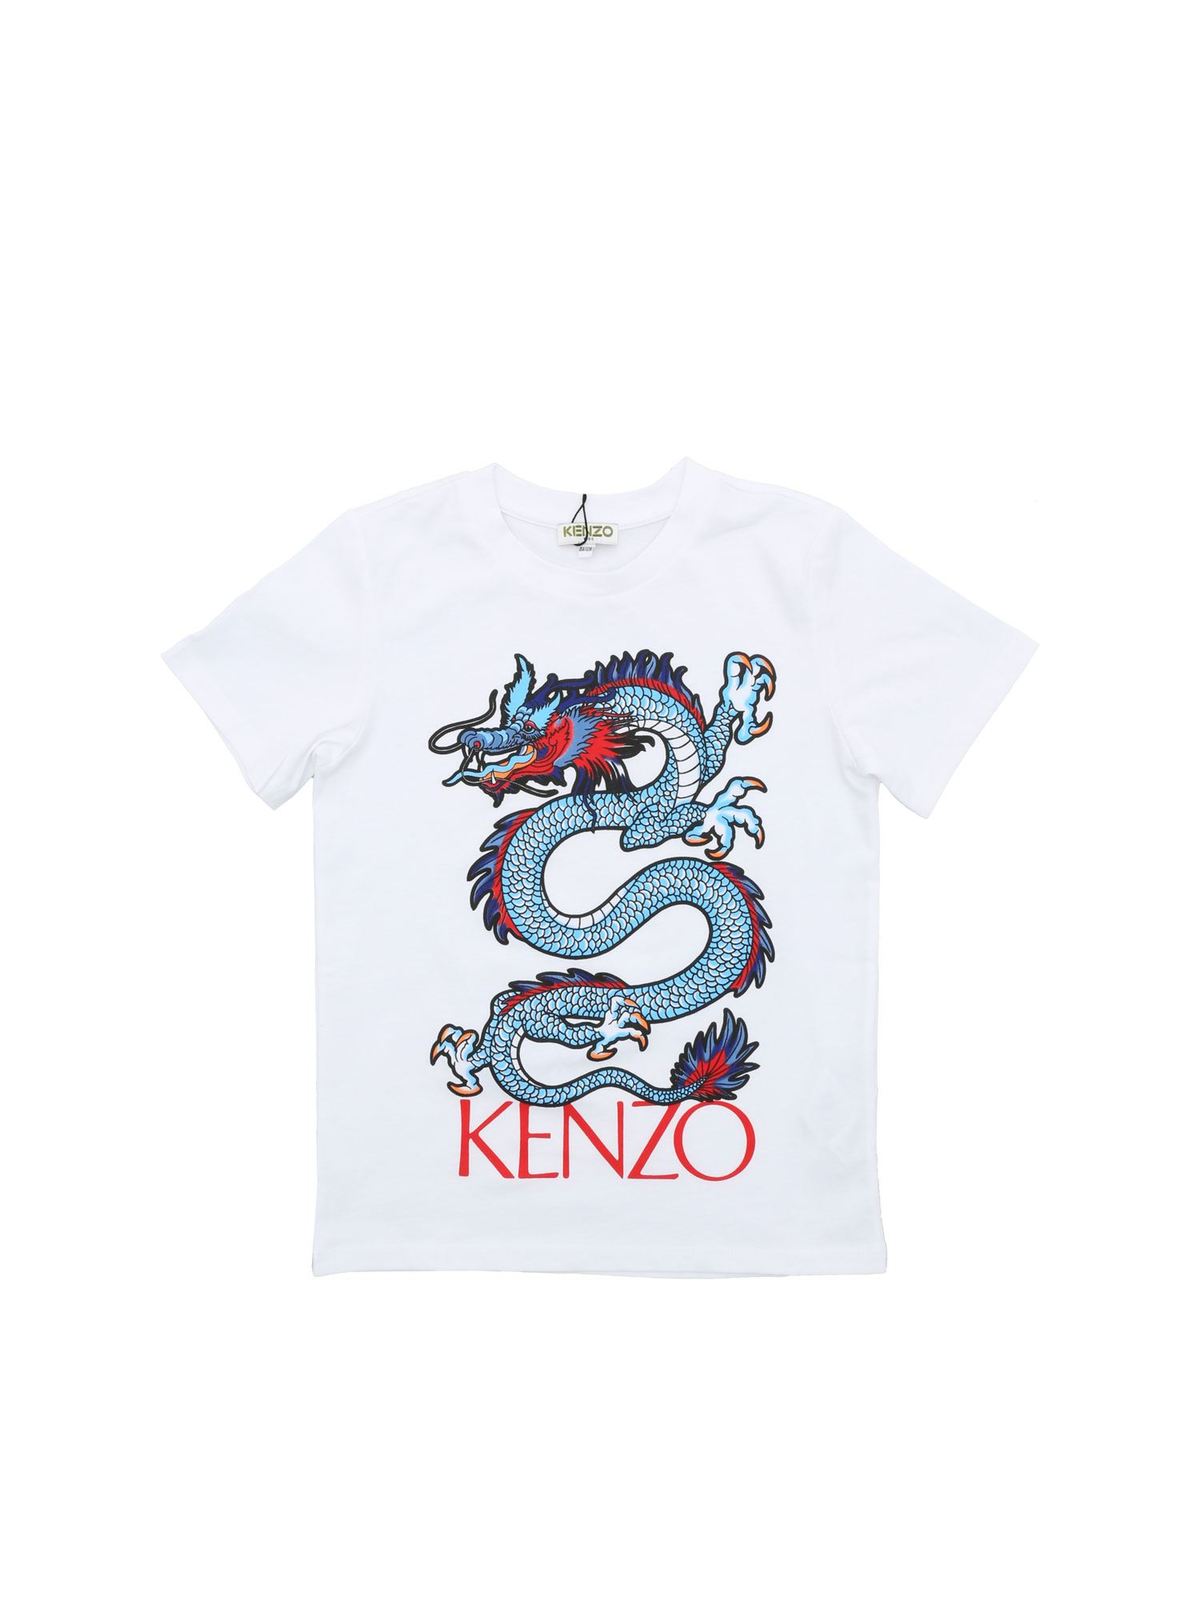 kenzo dragon shirt